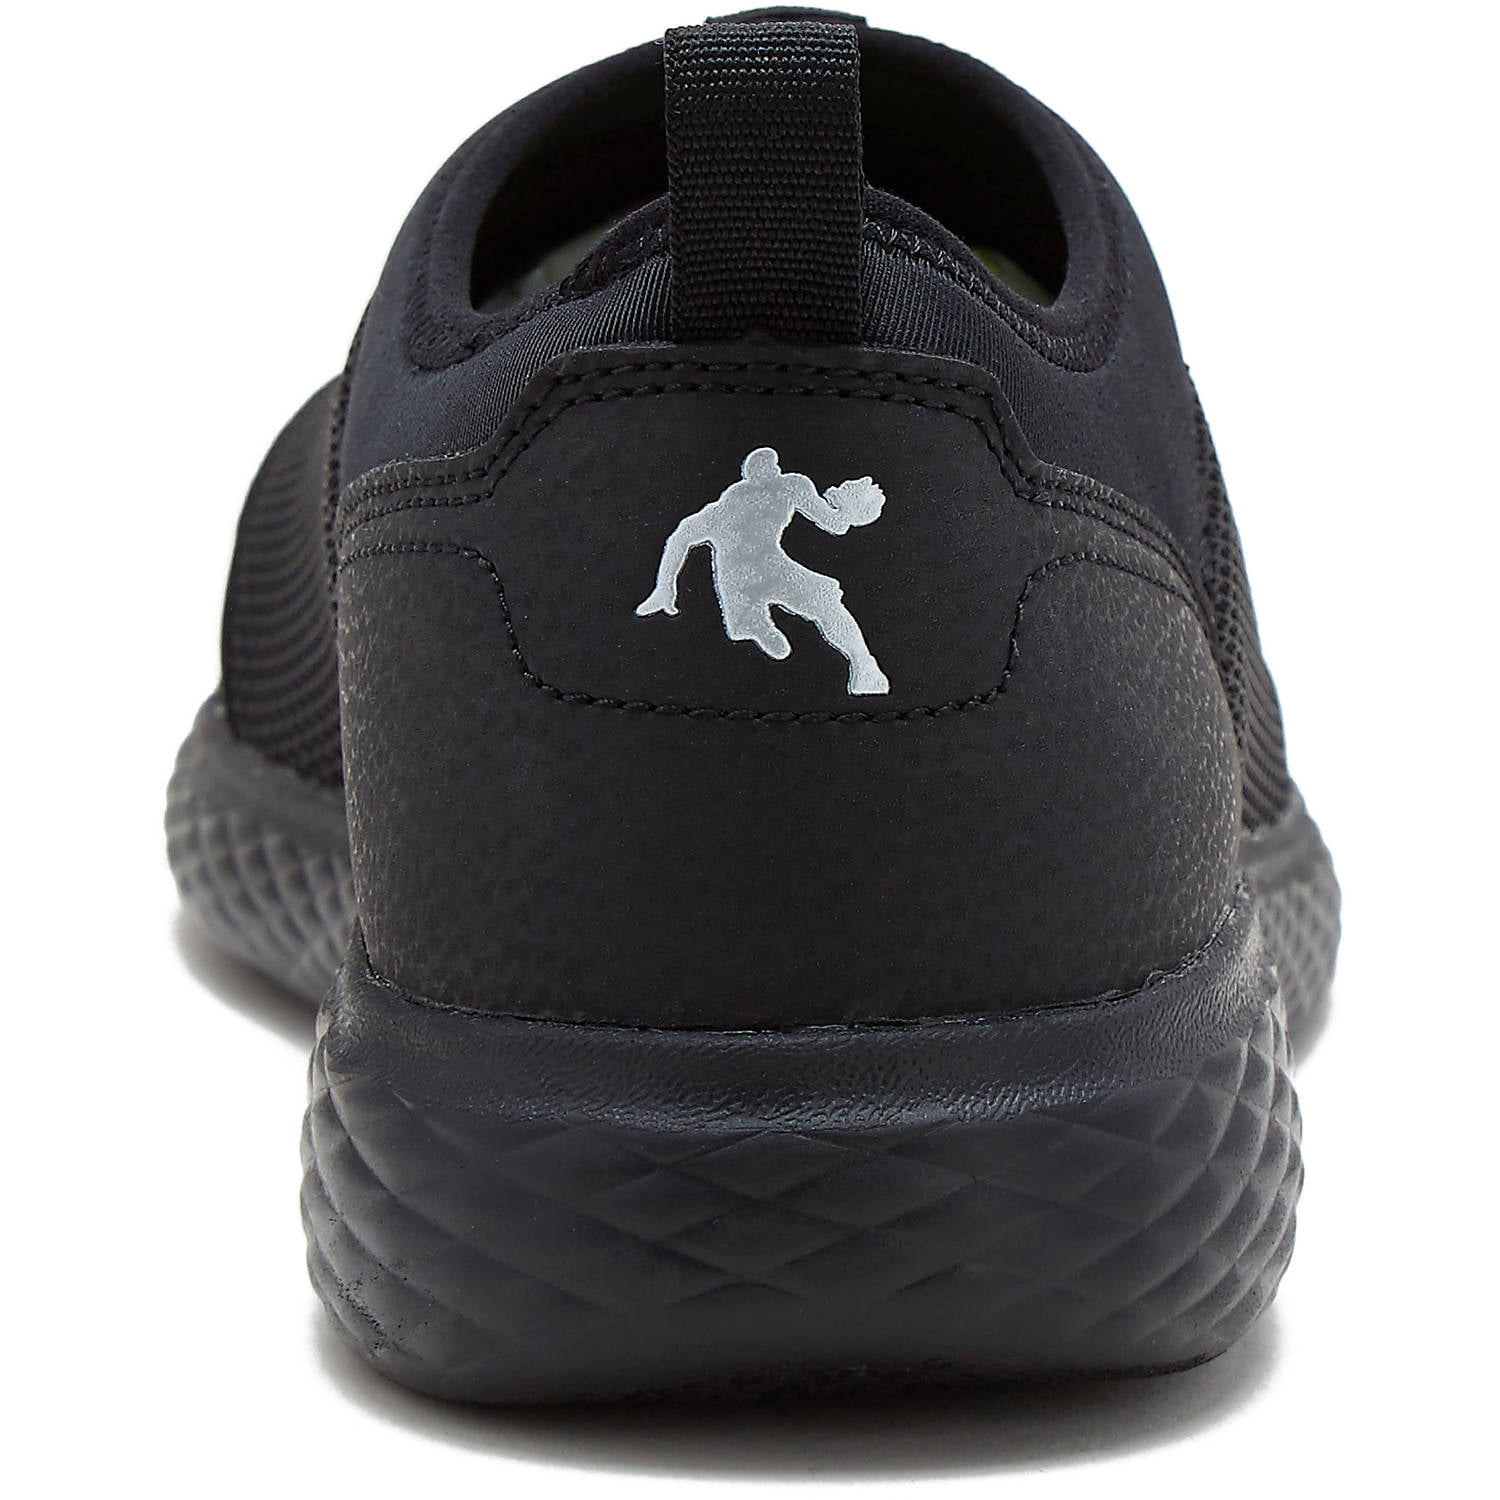 AND1 Men's Pivot Athletic Shoe - Best 